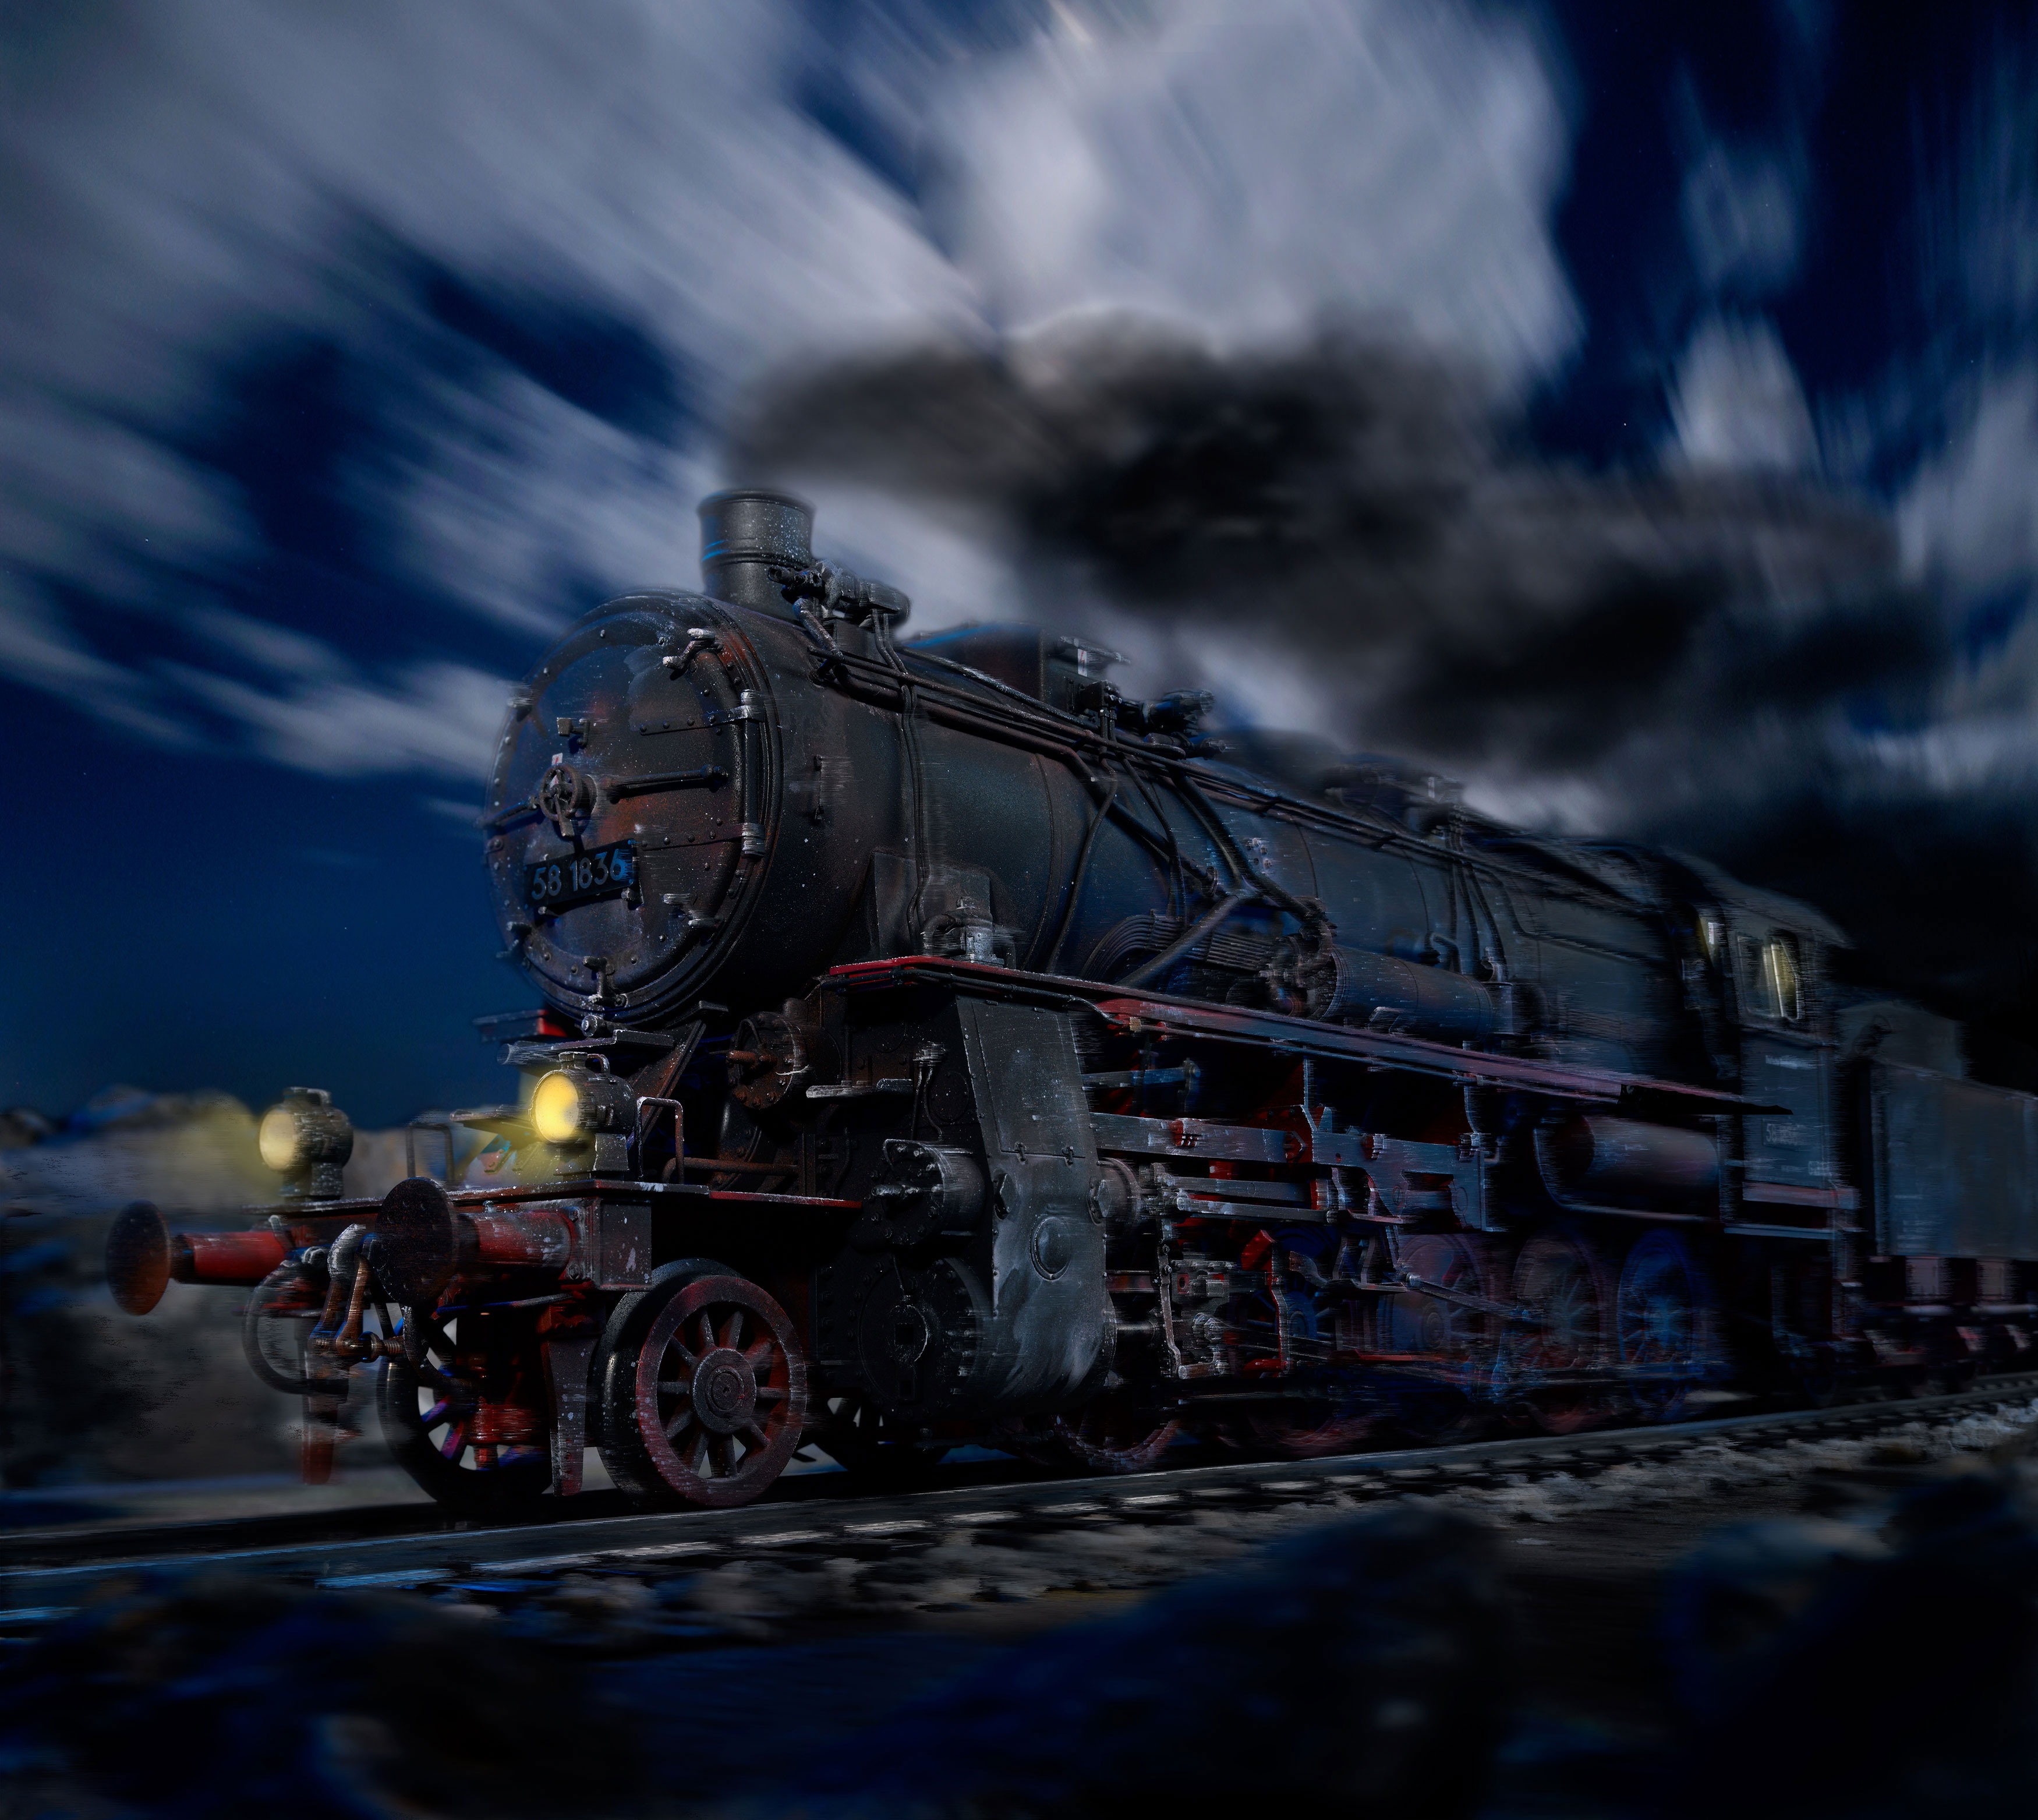 12dampflokomotive_digitalcomposing_maerklin_xxl